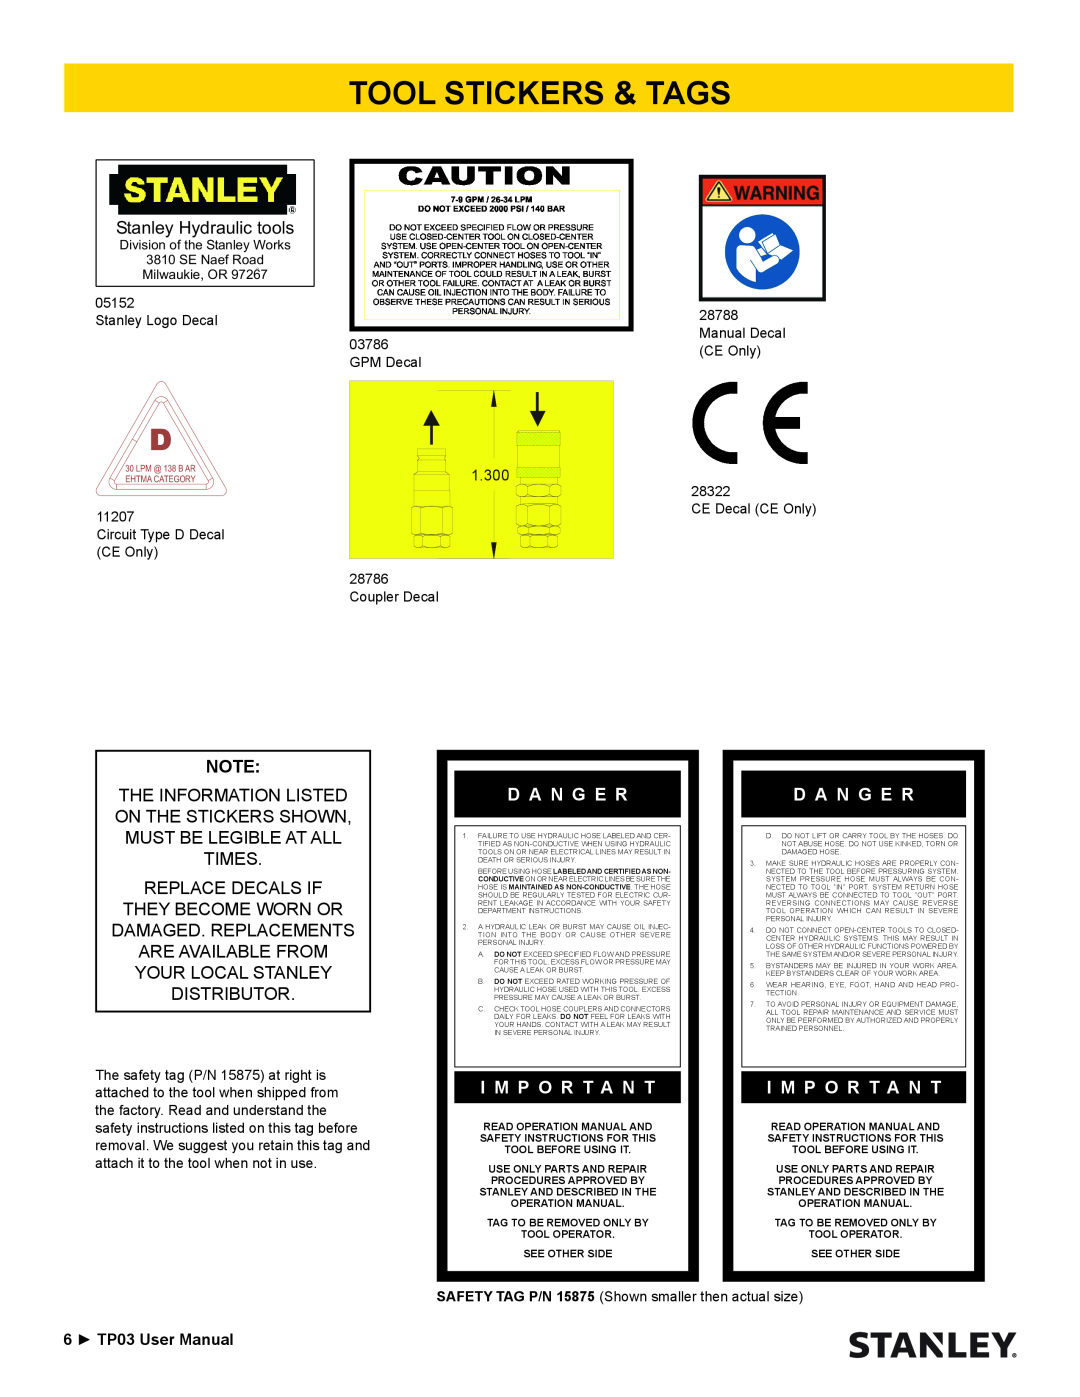 Stanley Black & Decker TP03 user manual Tool Stickers & Tags, D A N G E R, I M P O R T A N T 